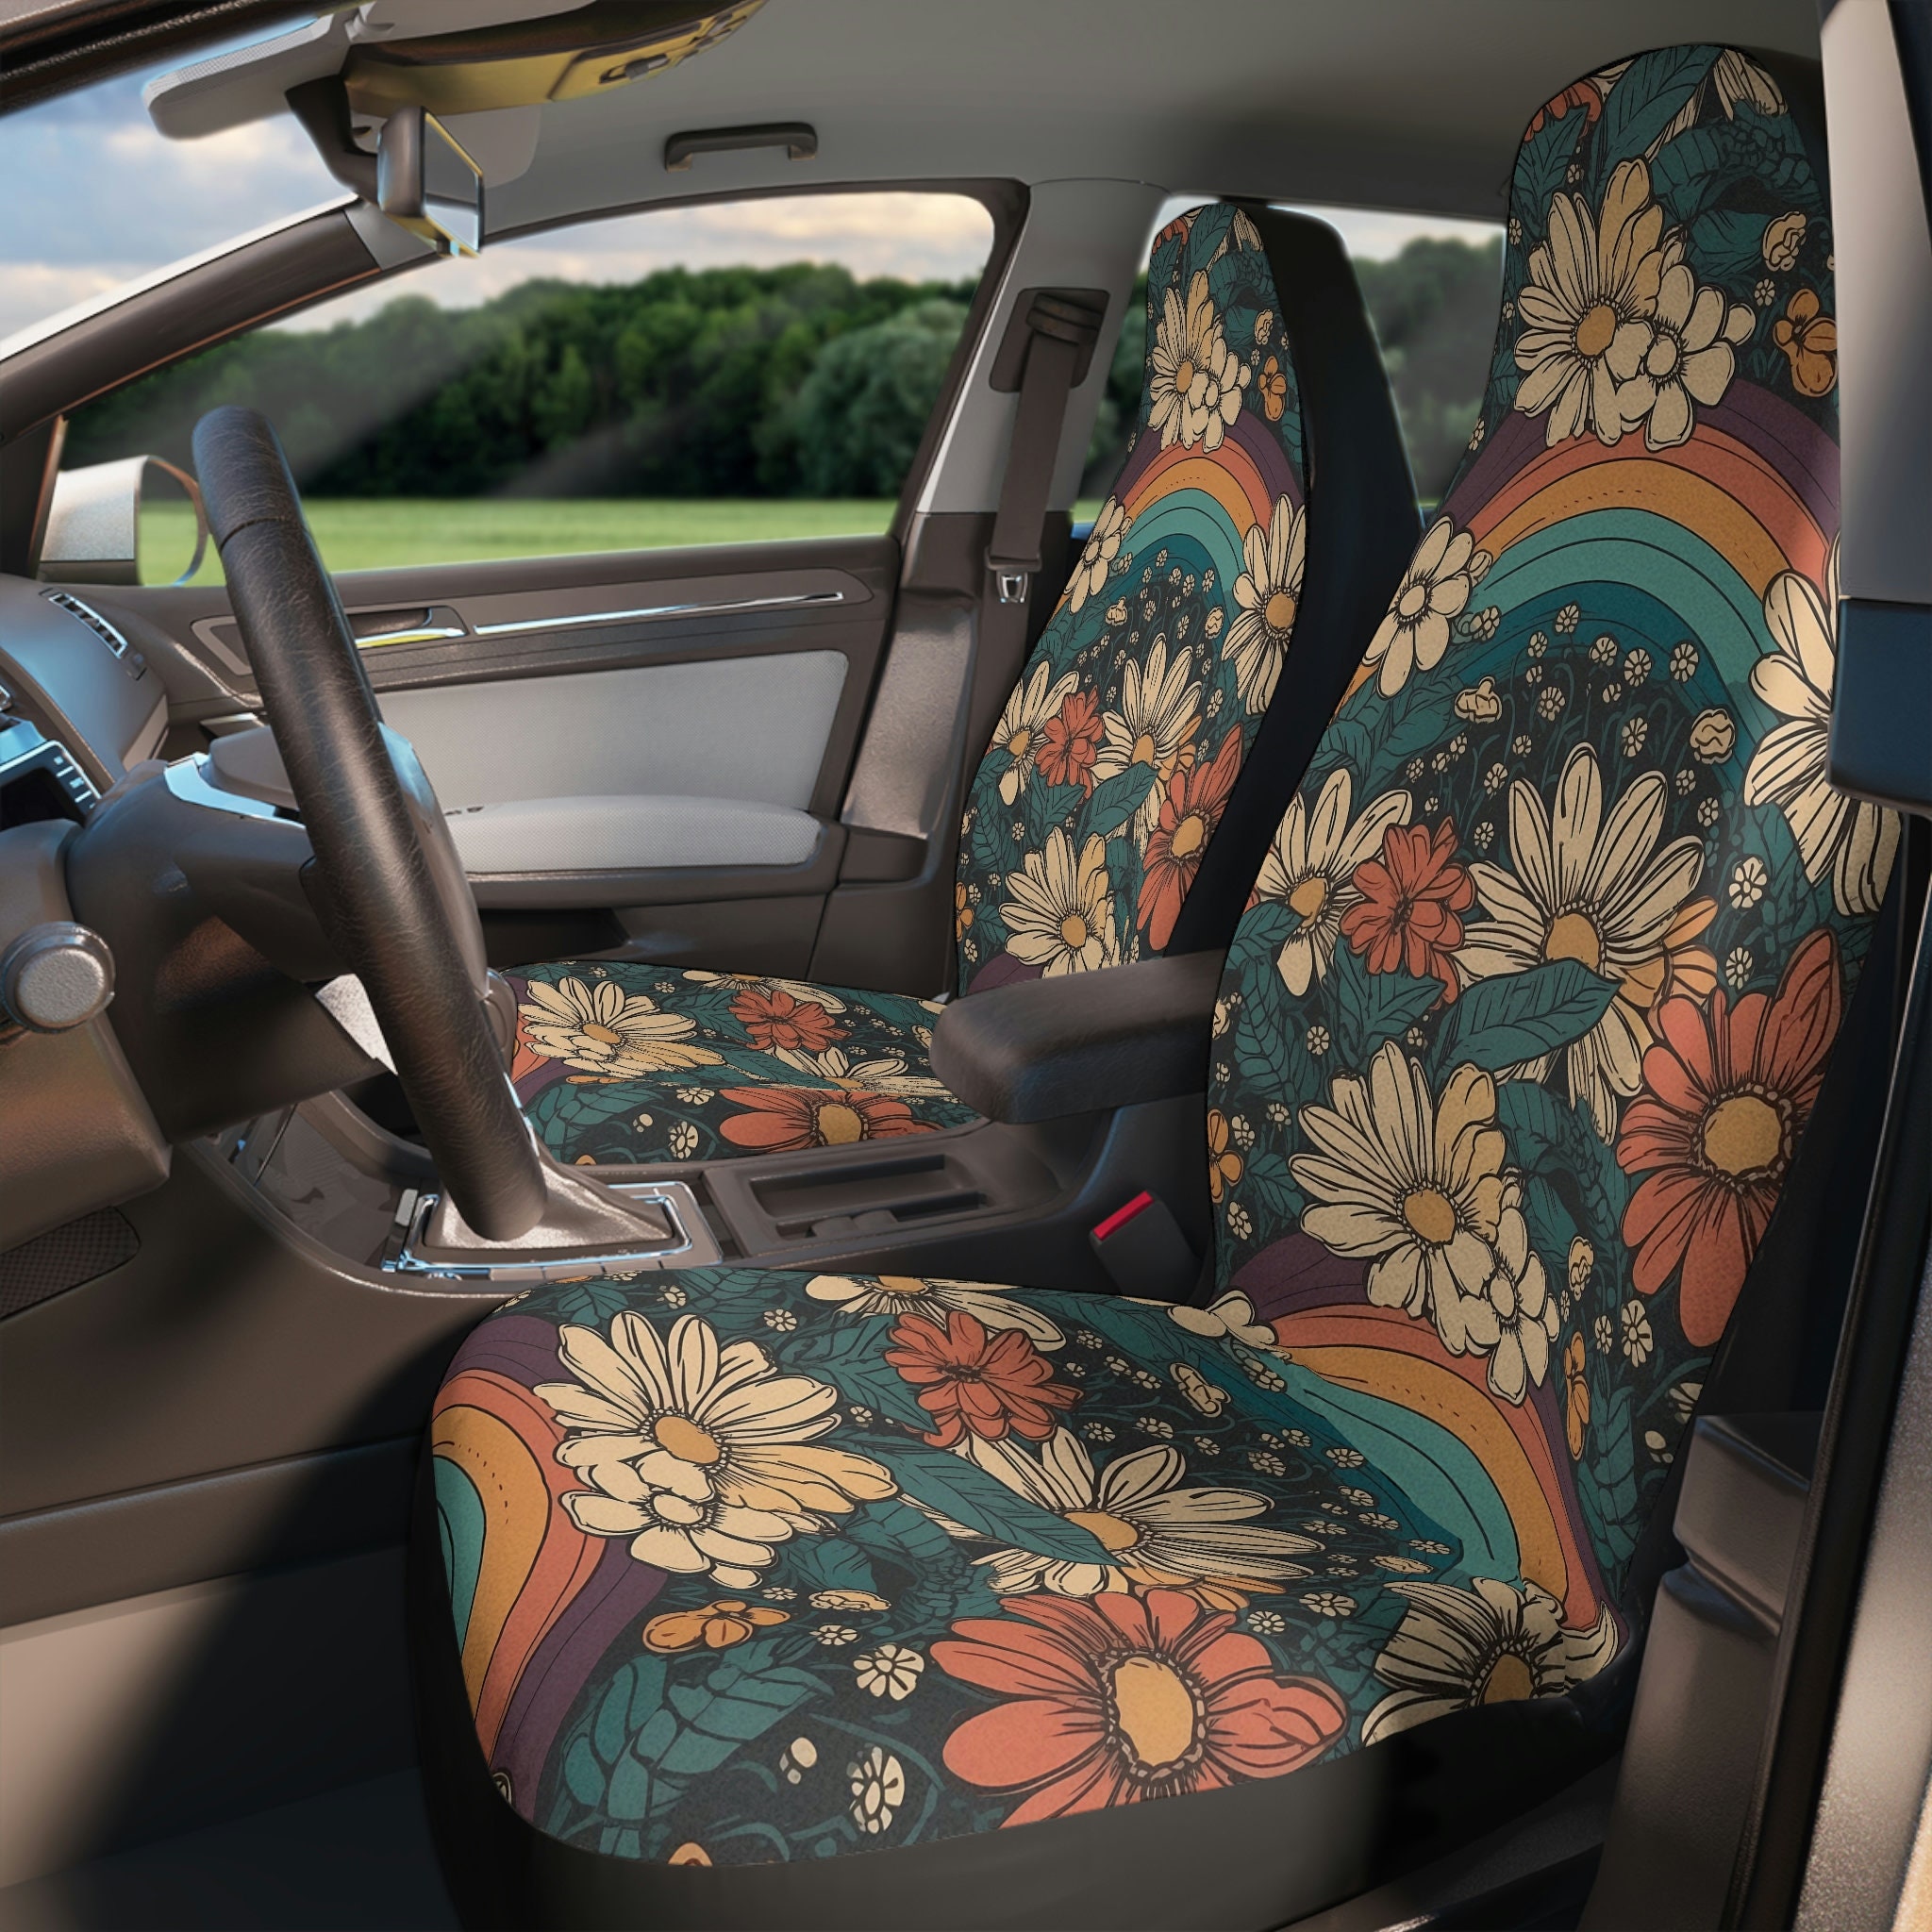 Discover boho cute flowers Car Seat Covers, Boho Cottagecore Seat Covers for vehicle, Boho car interior decor, cute car accessories gift boho floral